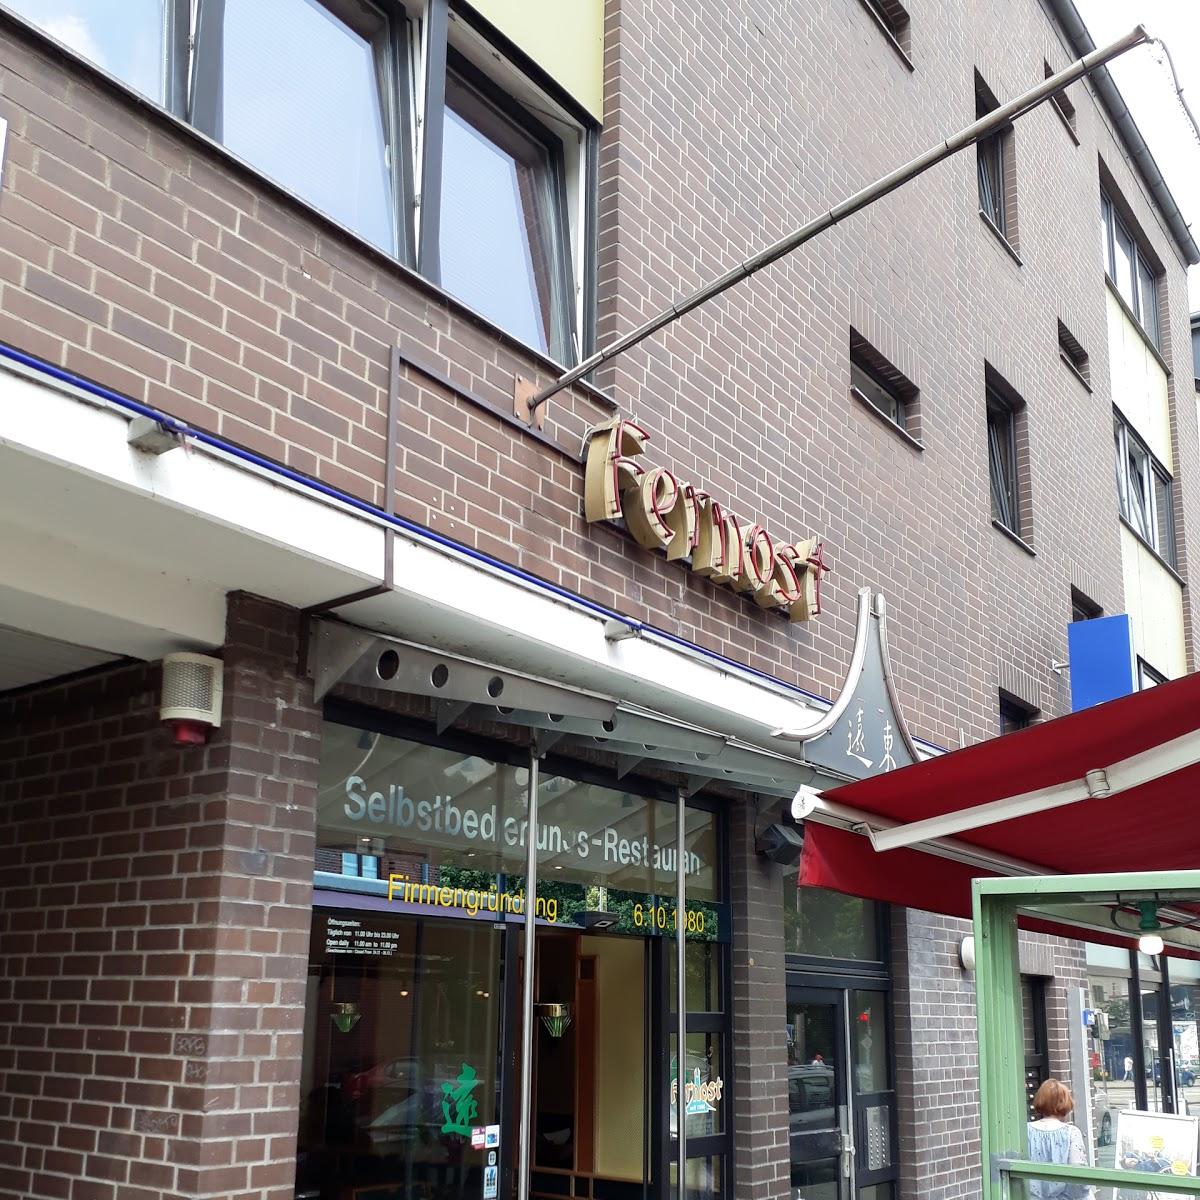 Restaurant "Fernost" in Hannover